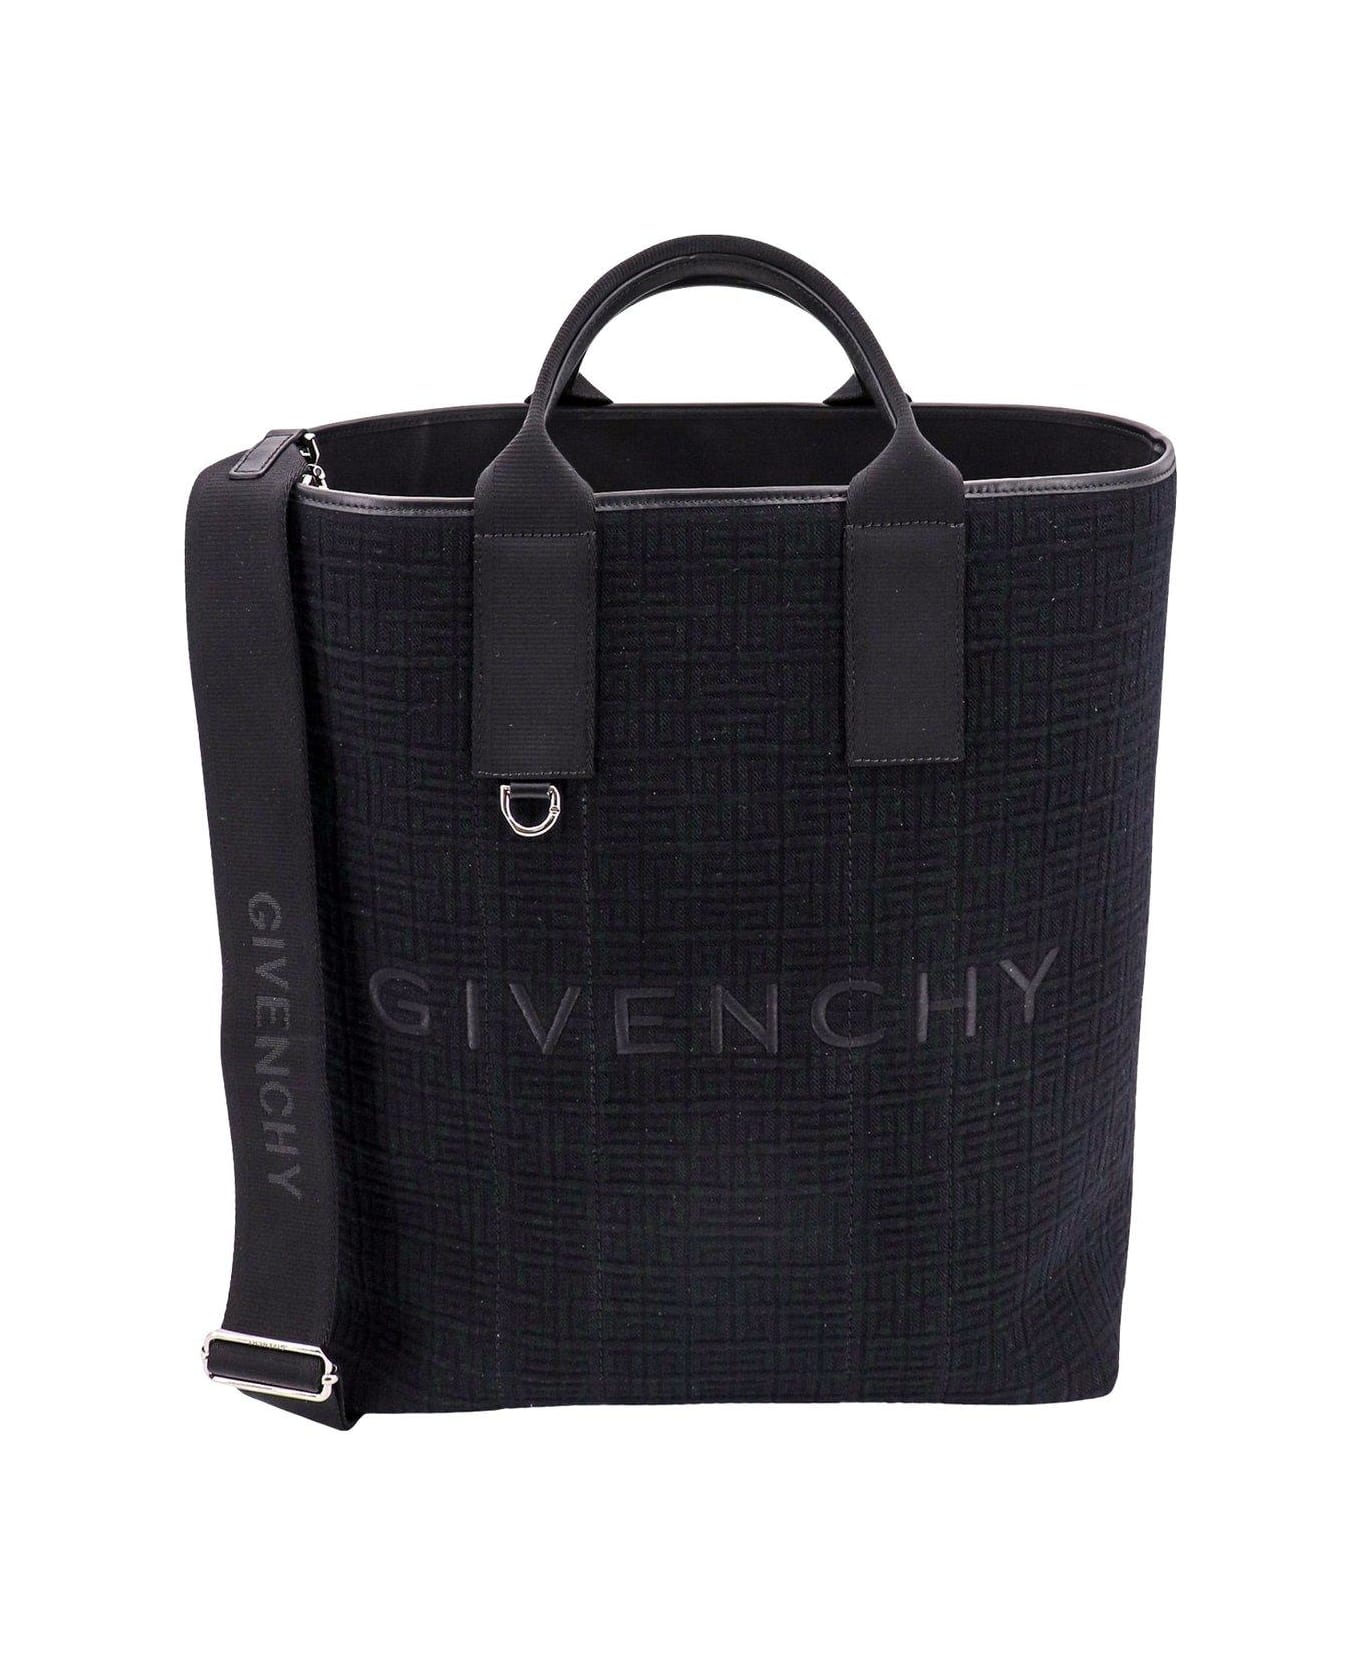 Givenchy Large G-essentials Tote Bag - Black トートバッグ